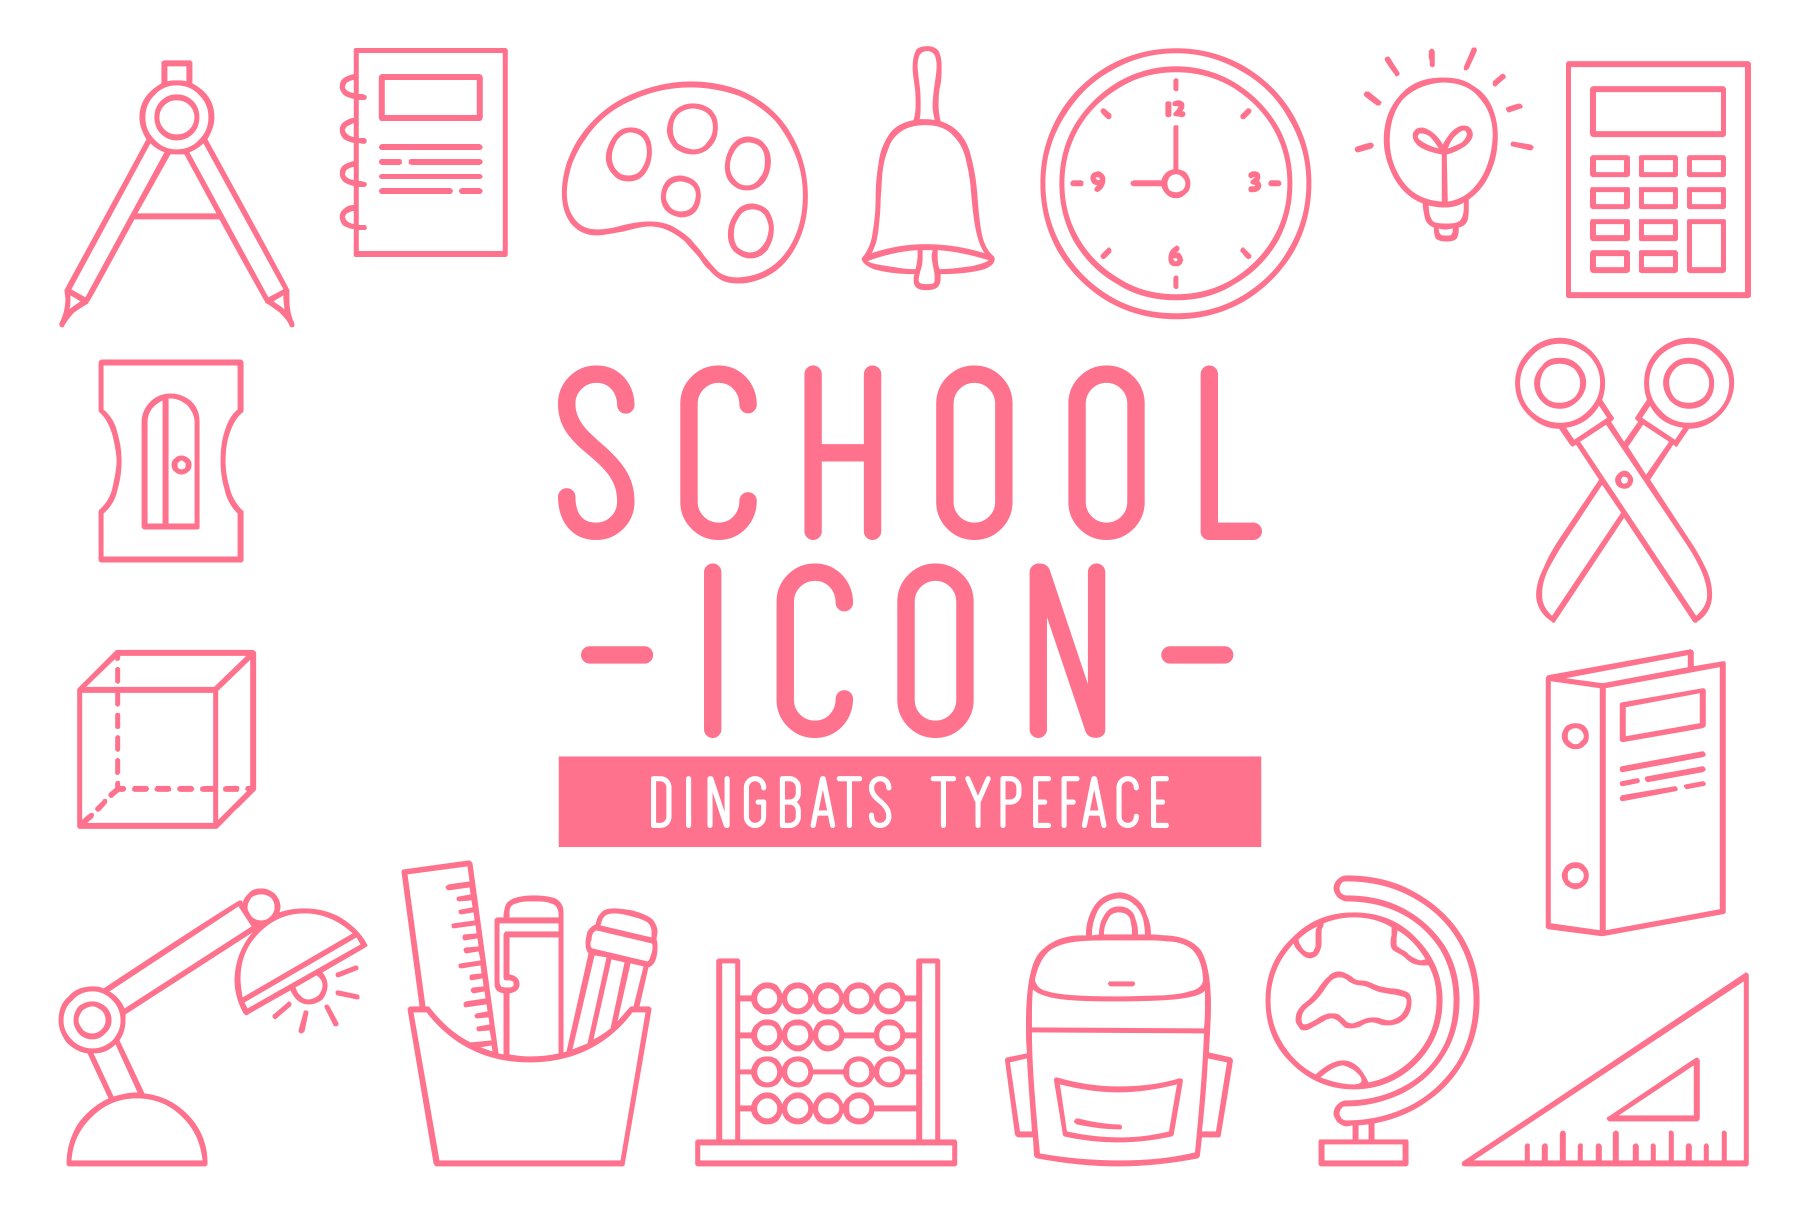 School Icon cover image.